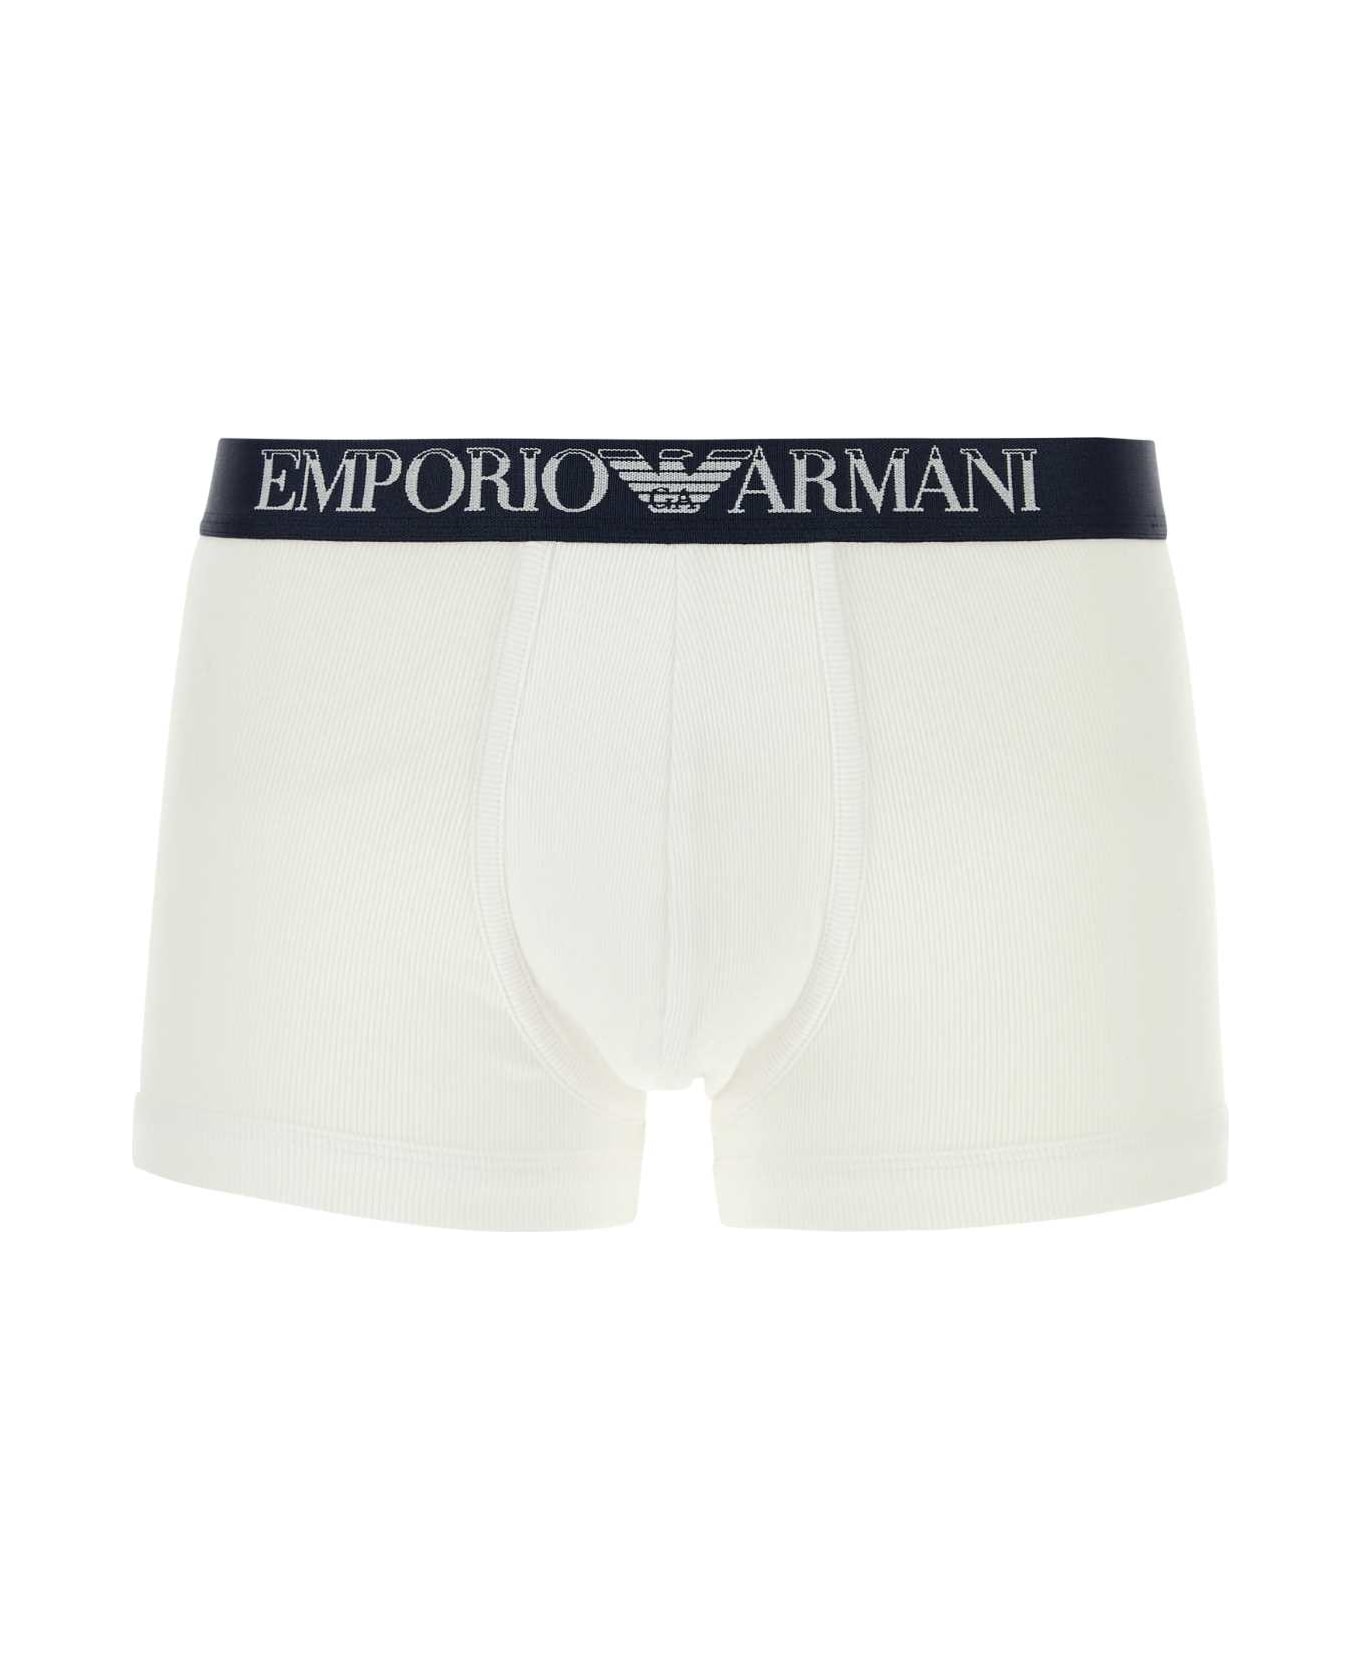 Emporio Armani Cotton Boxer Set - 17135 ショーツ